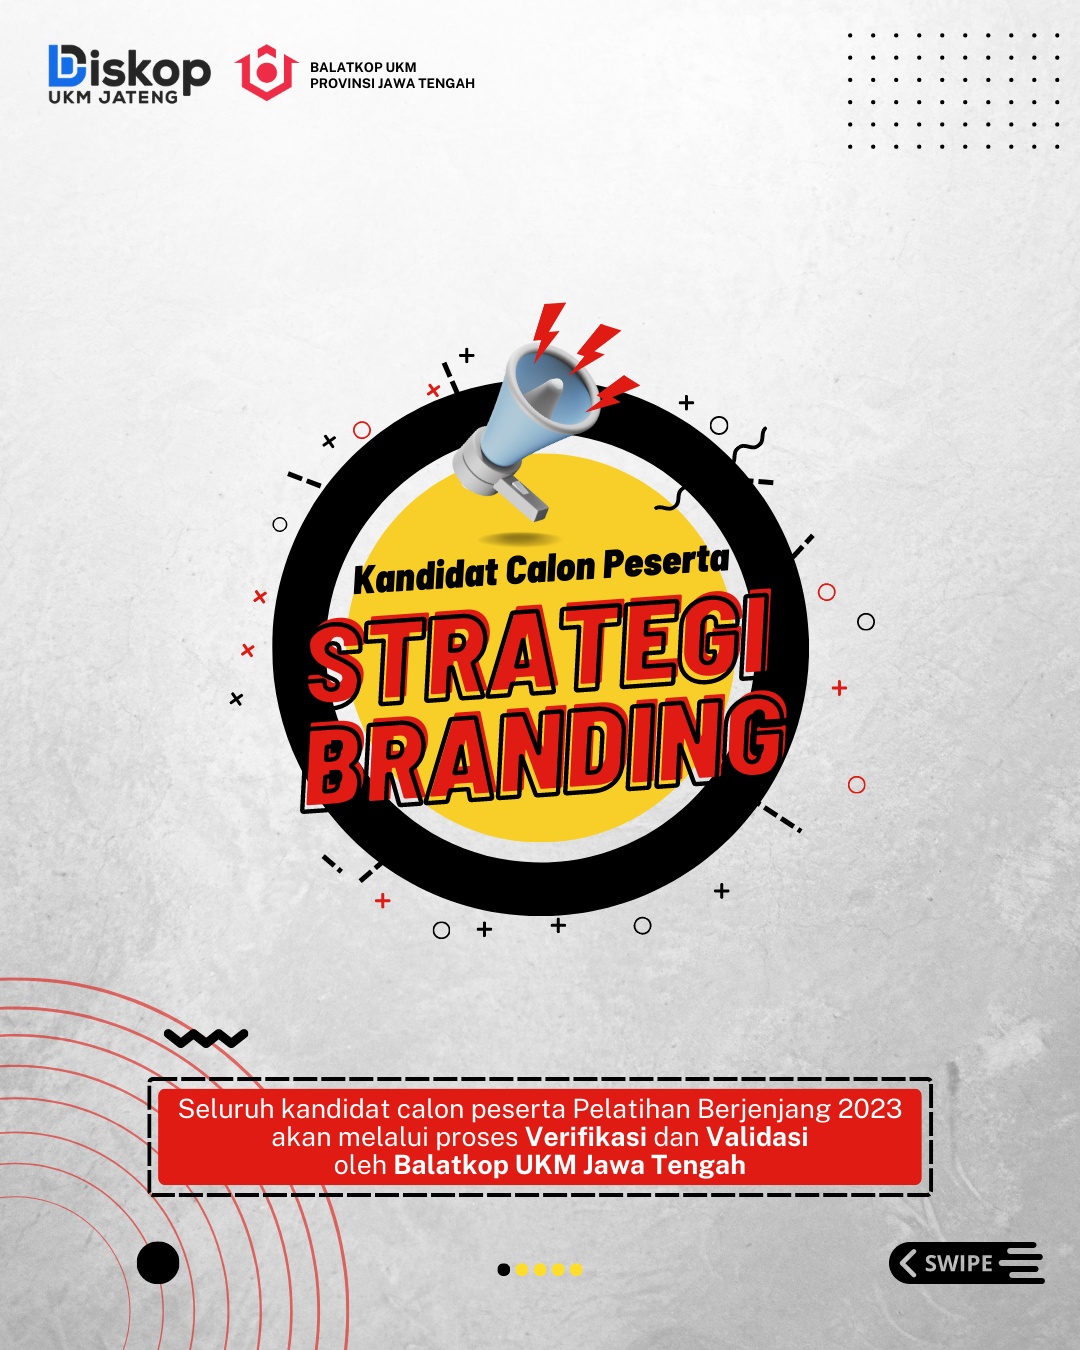 Kandidat Calon Peserta Strategi Branding